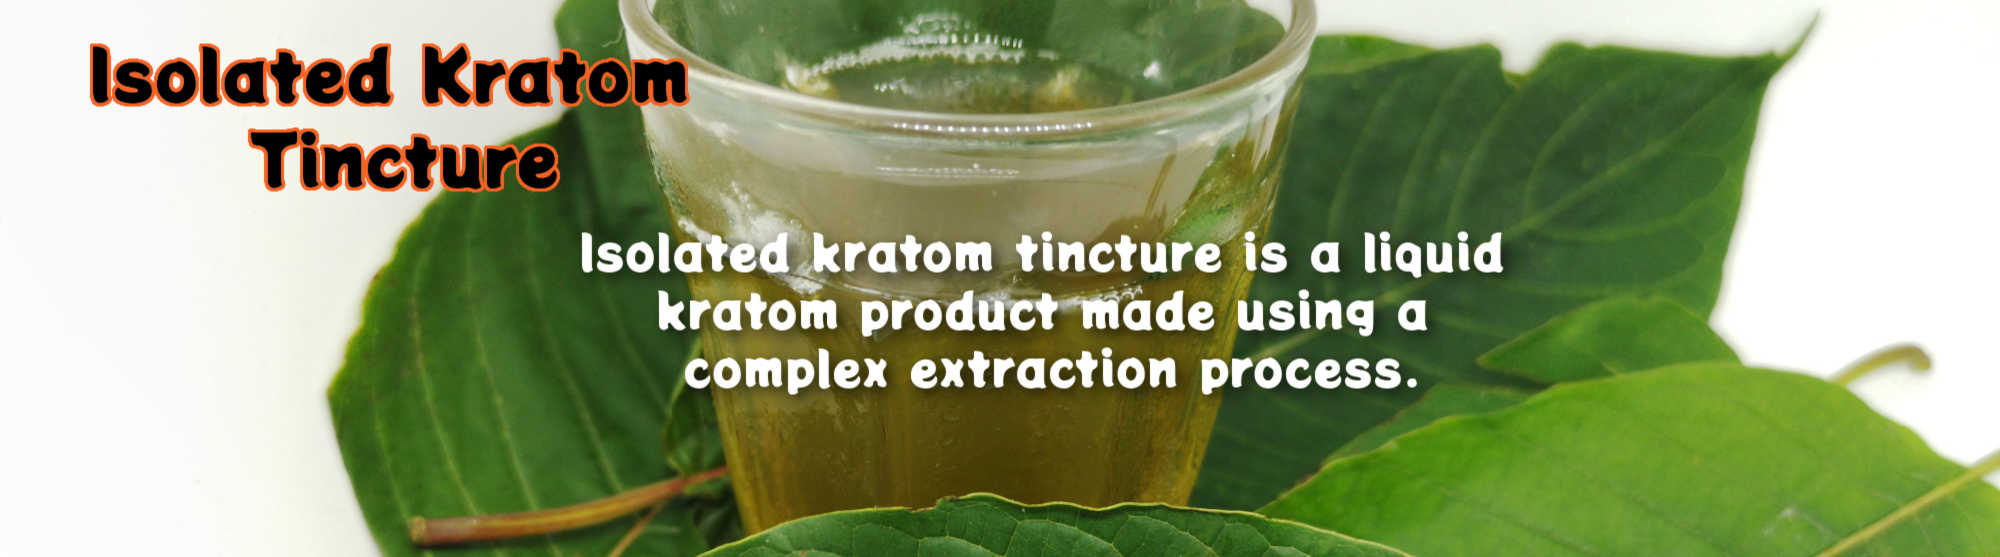 image of isolated kratom tincture